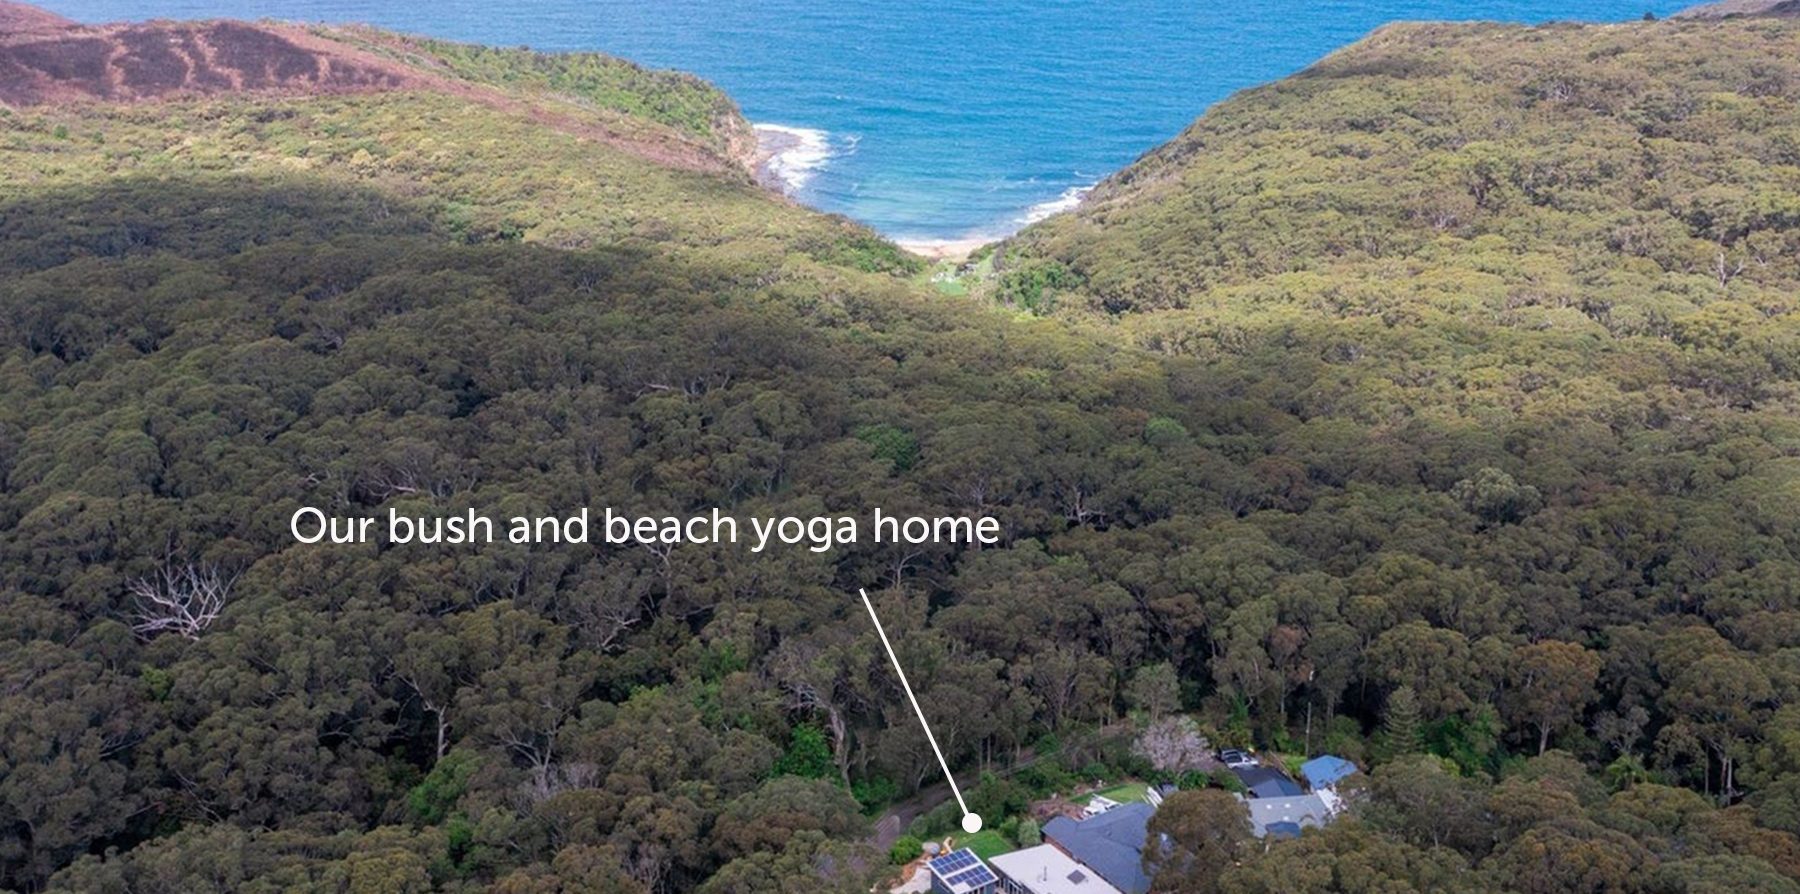 Bush and beach yoga home